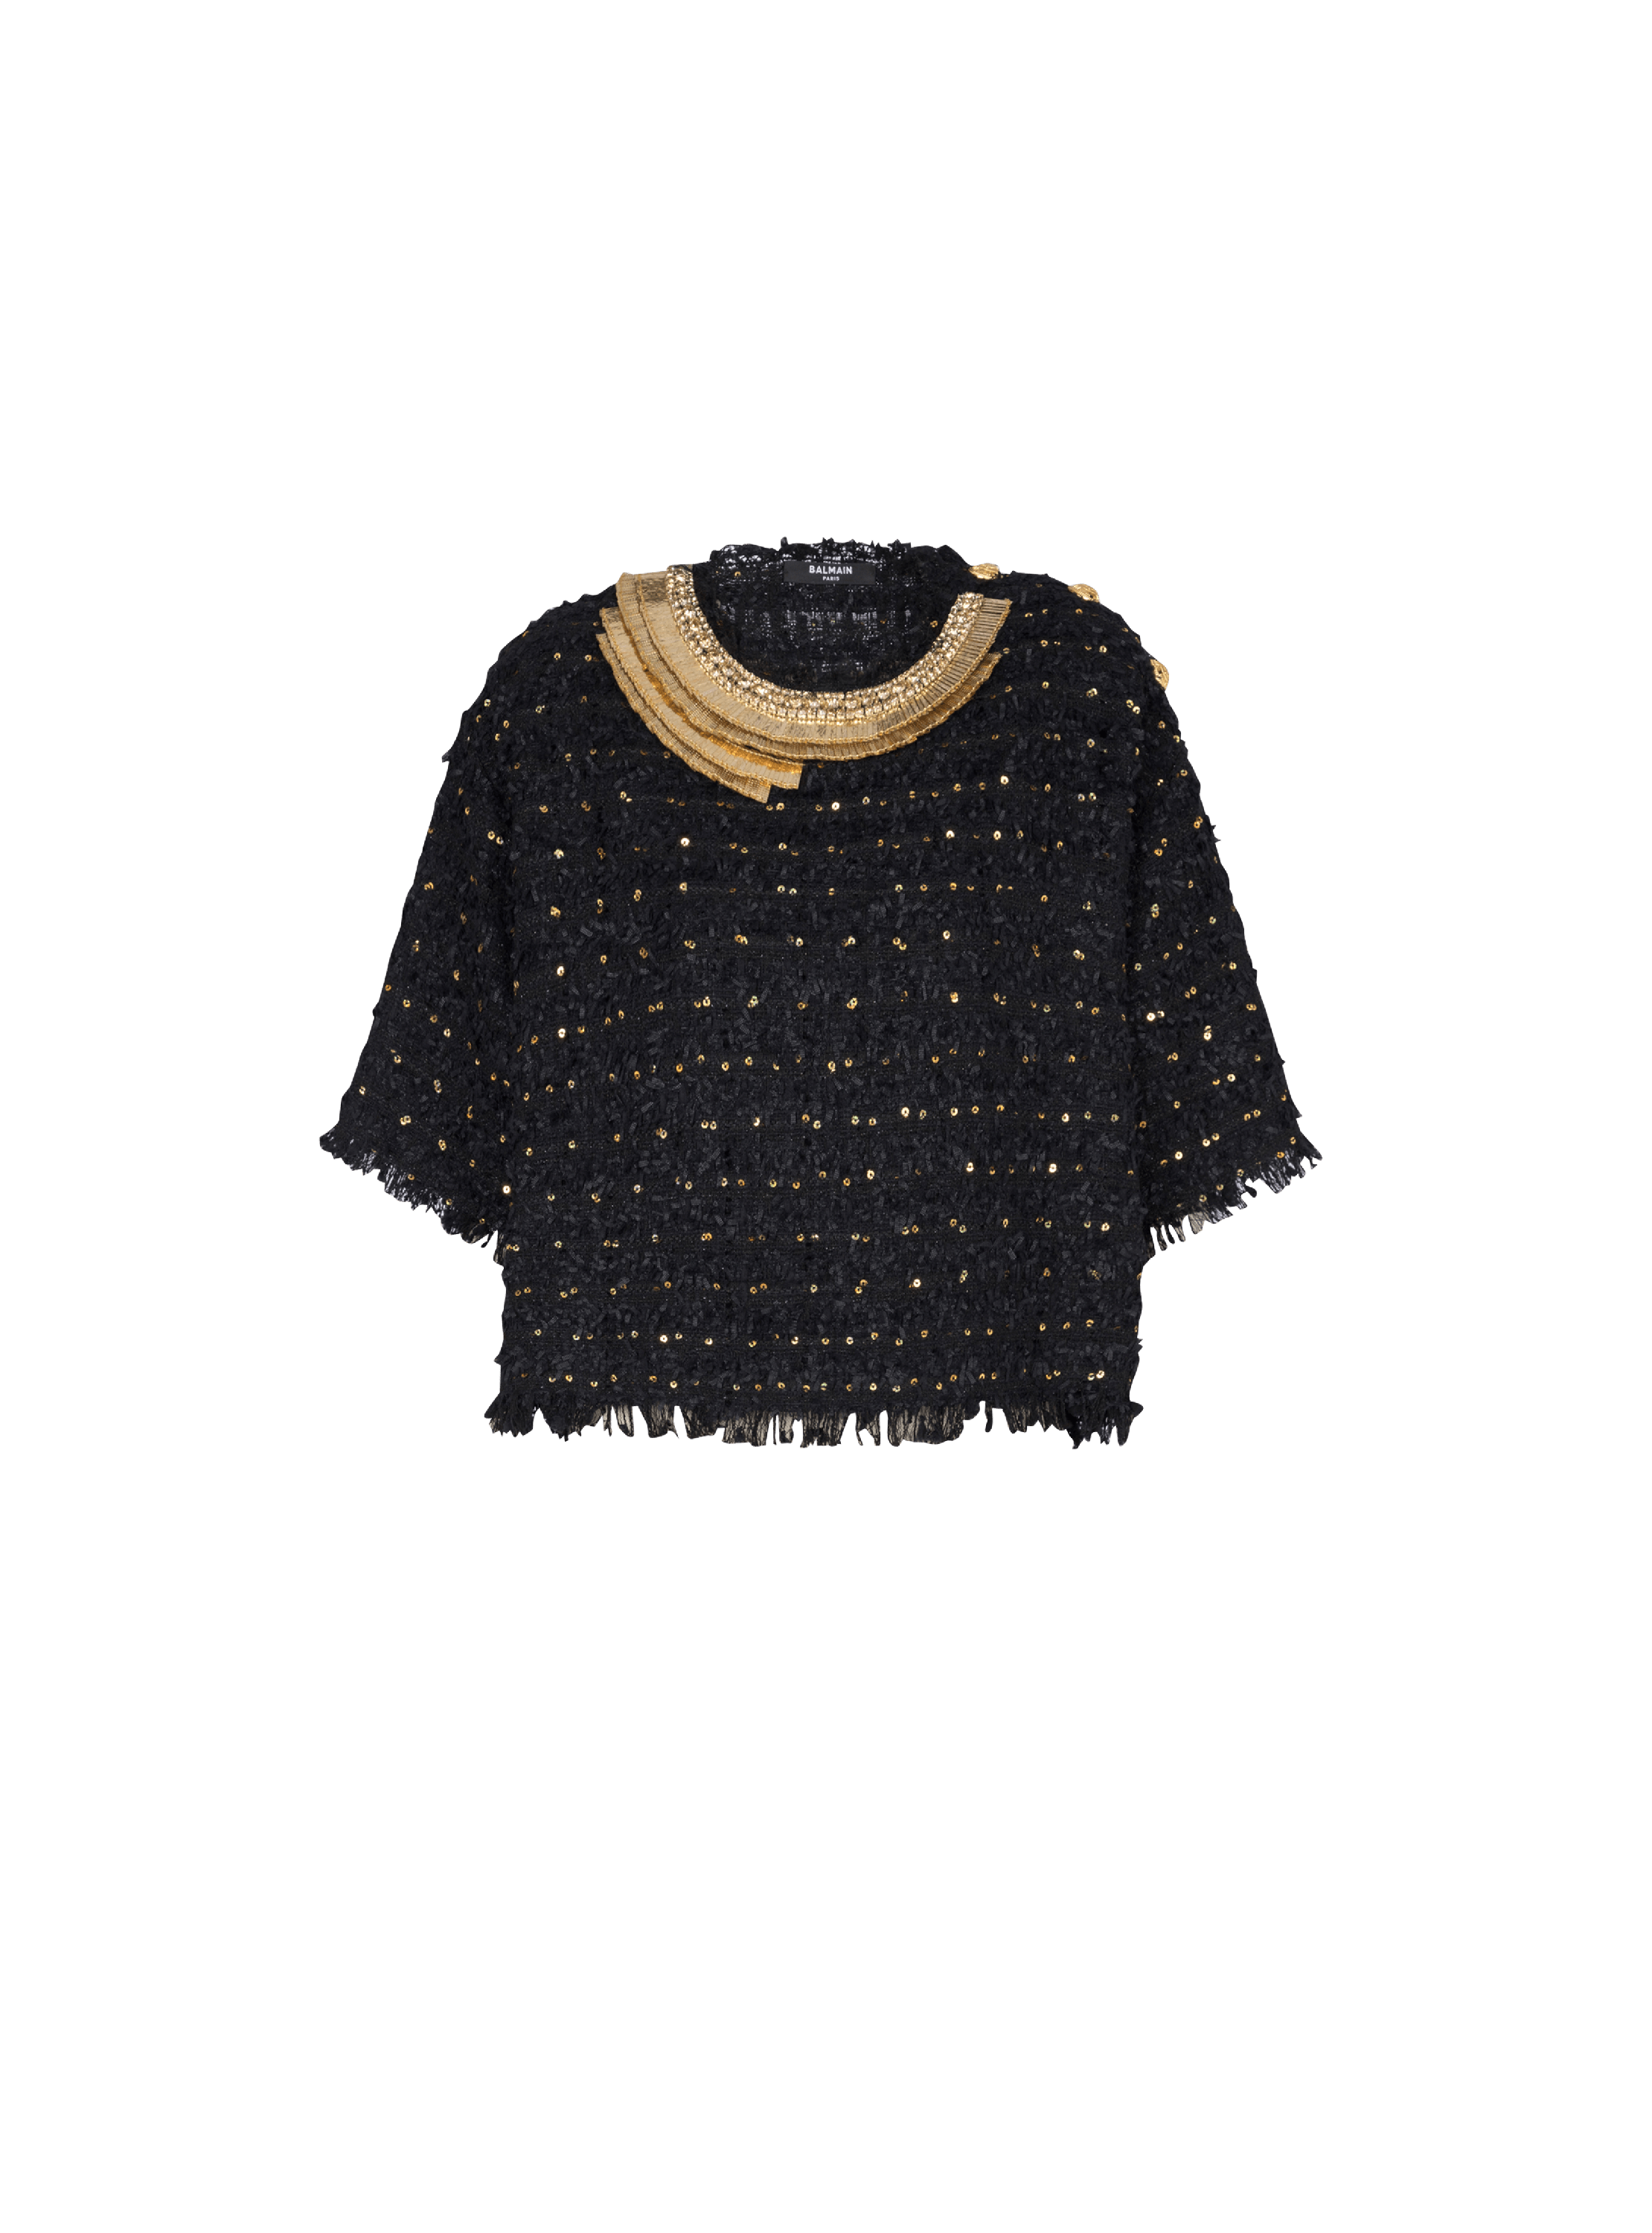 Embroidered tweed crop top, black, hi-res